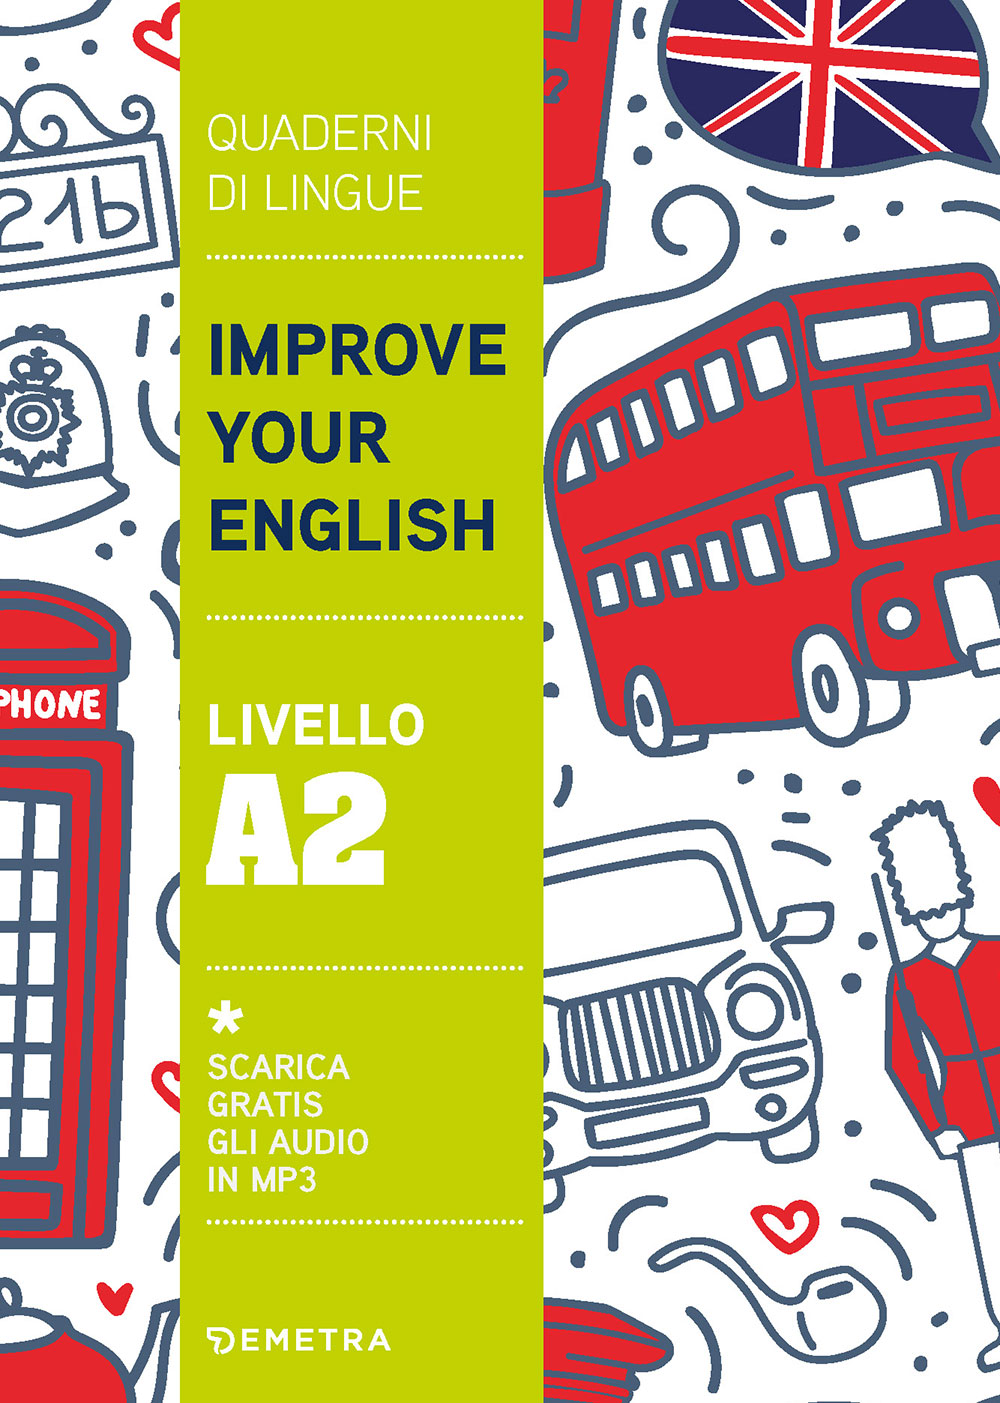 Improve your English livello A2